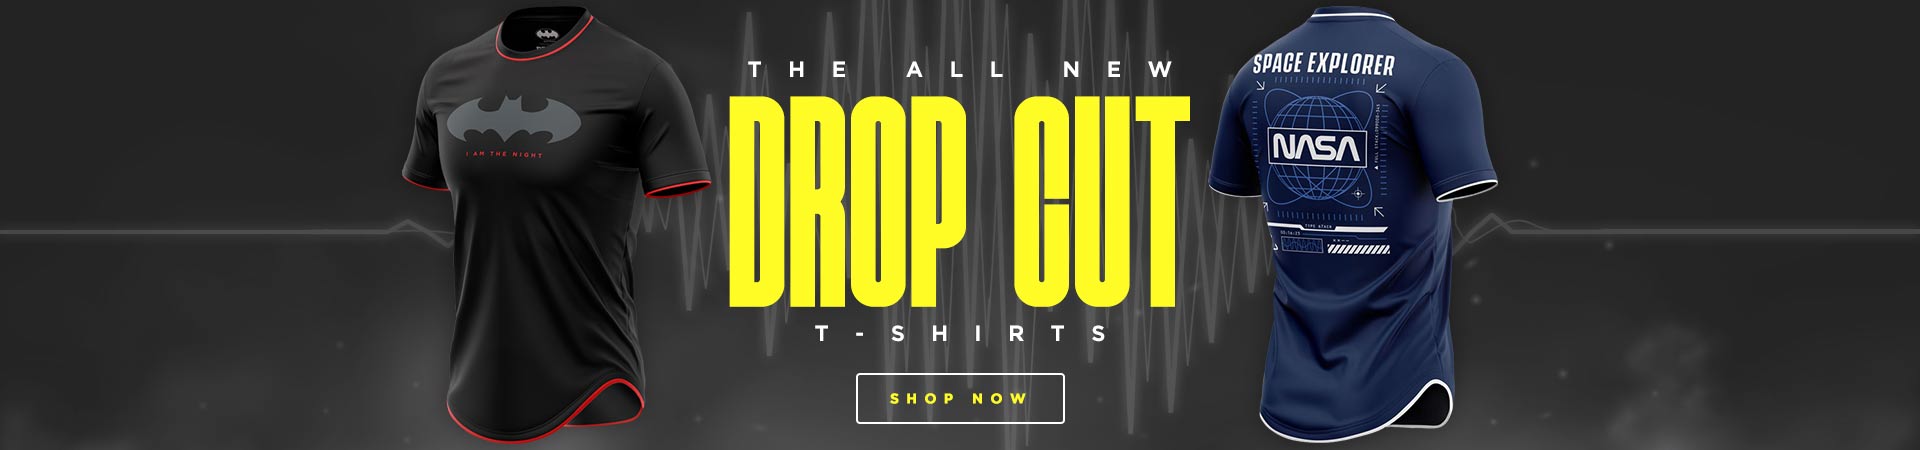 Drop Cut T-shirts